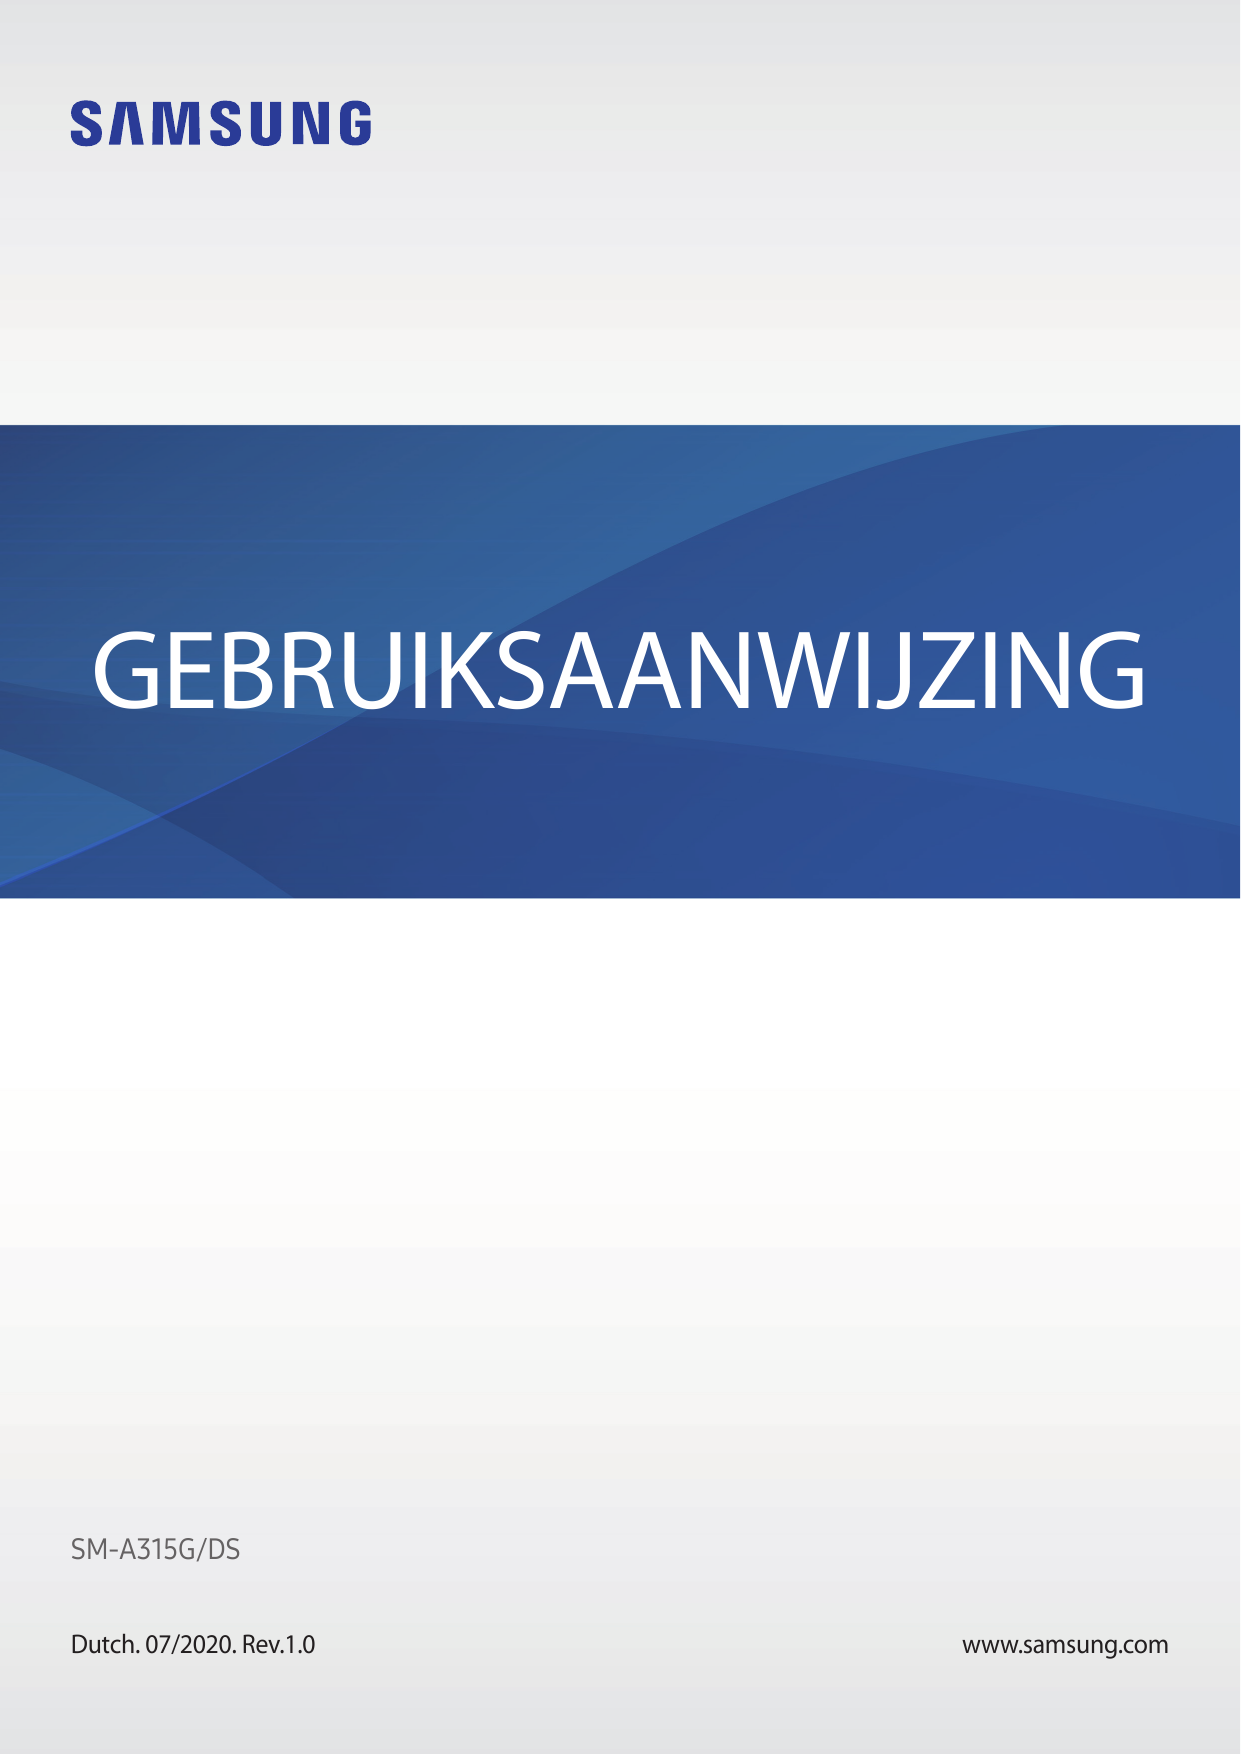 GEBRUIKSAANWIJZINGSM-A315G/DSDutch. 07/2020. Rev.1.0www.samsung.com